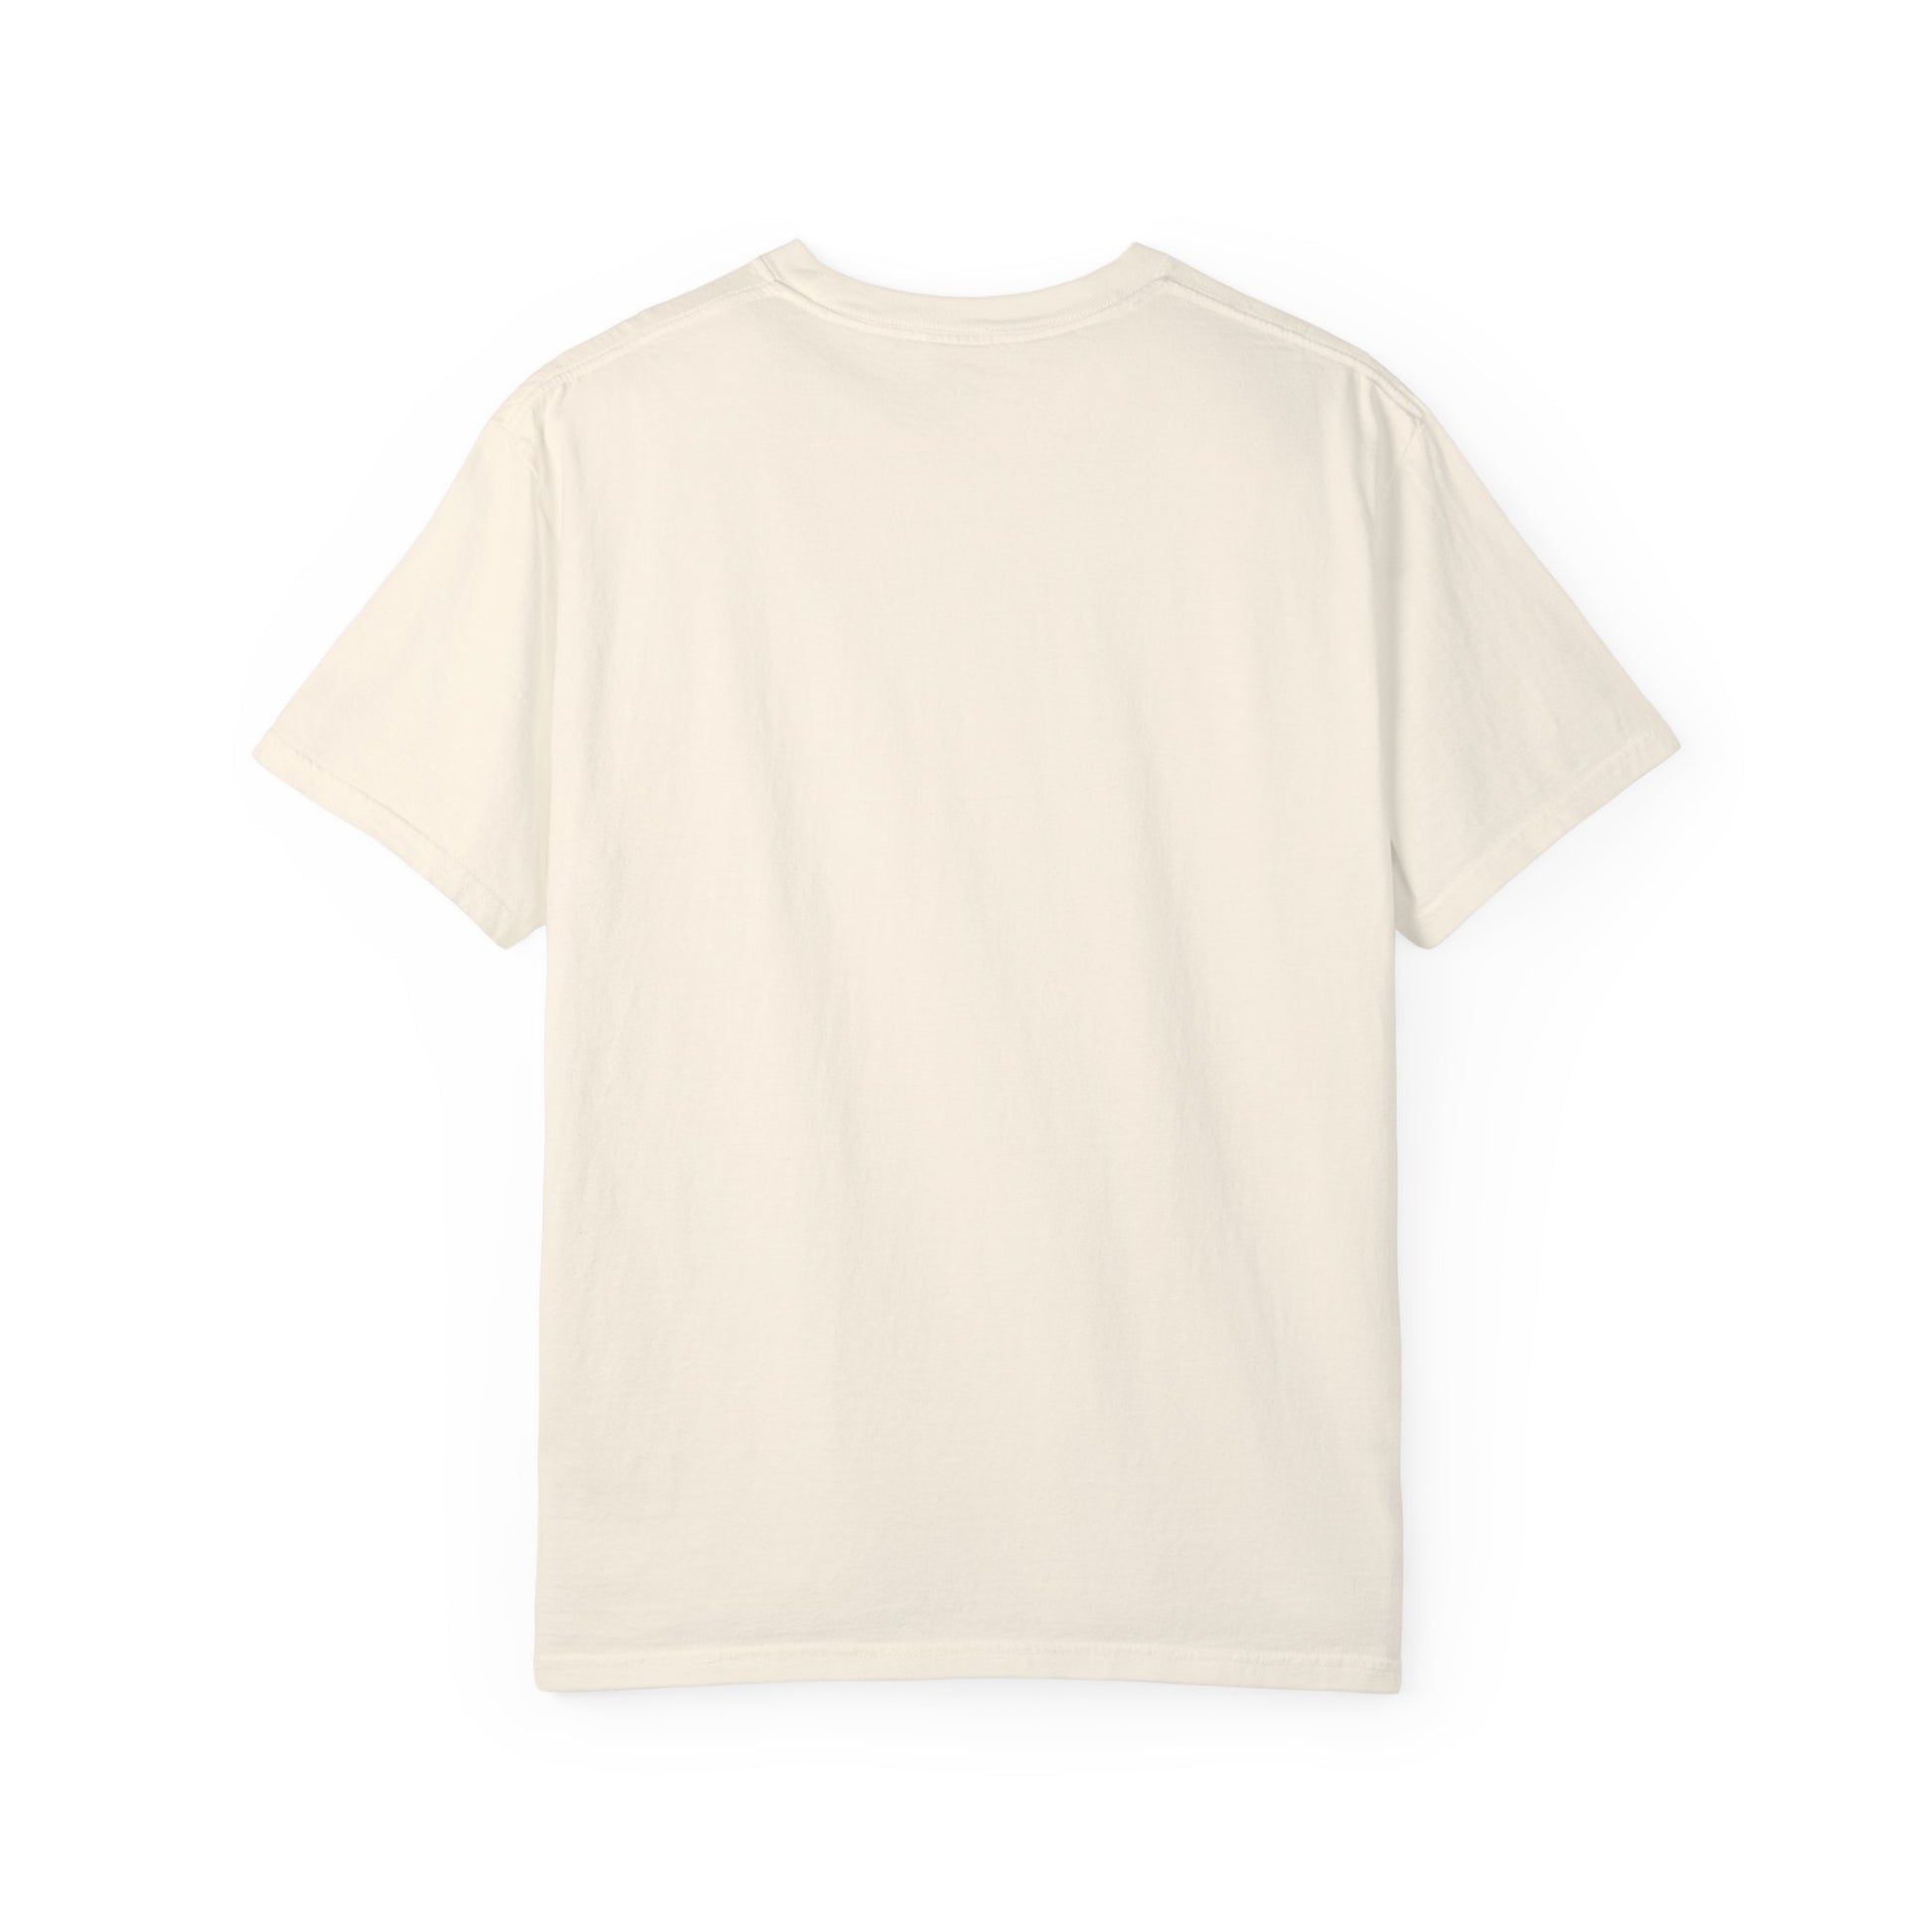 Hip Hop Teddy Bear Graphic Unisex Garment-dyed T-shirt Cotton Funny Humorous Graphic Soft Premium Unisex Men Women Ivory T-shirt Birthday Gift-43